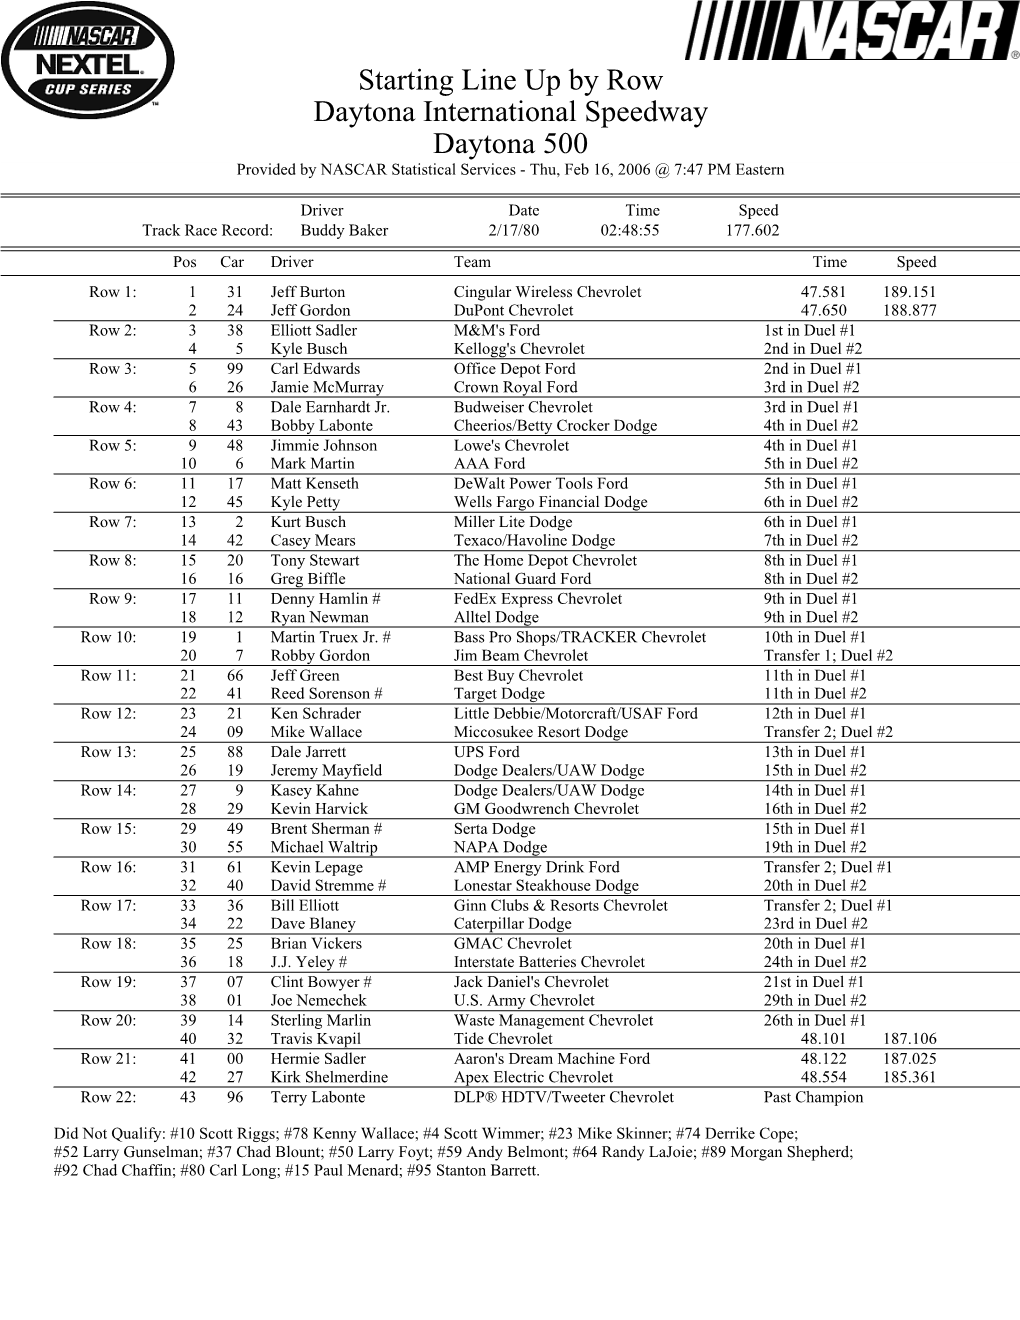 Starting Line up by Row Daytona International Speedway Daytona 500 Provided by NASCAR Statistical Services - Thu, Feb 16, 2006 @ 7:47 PM Eastern